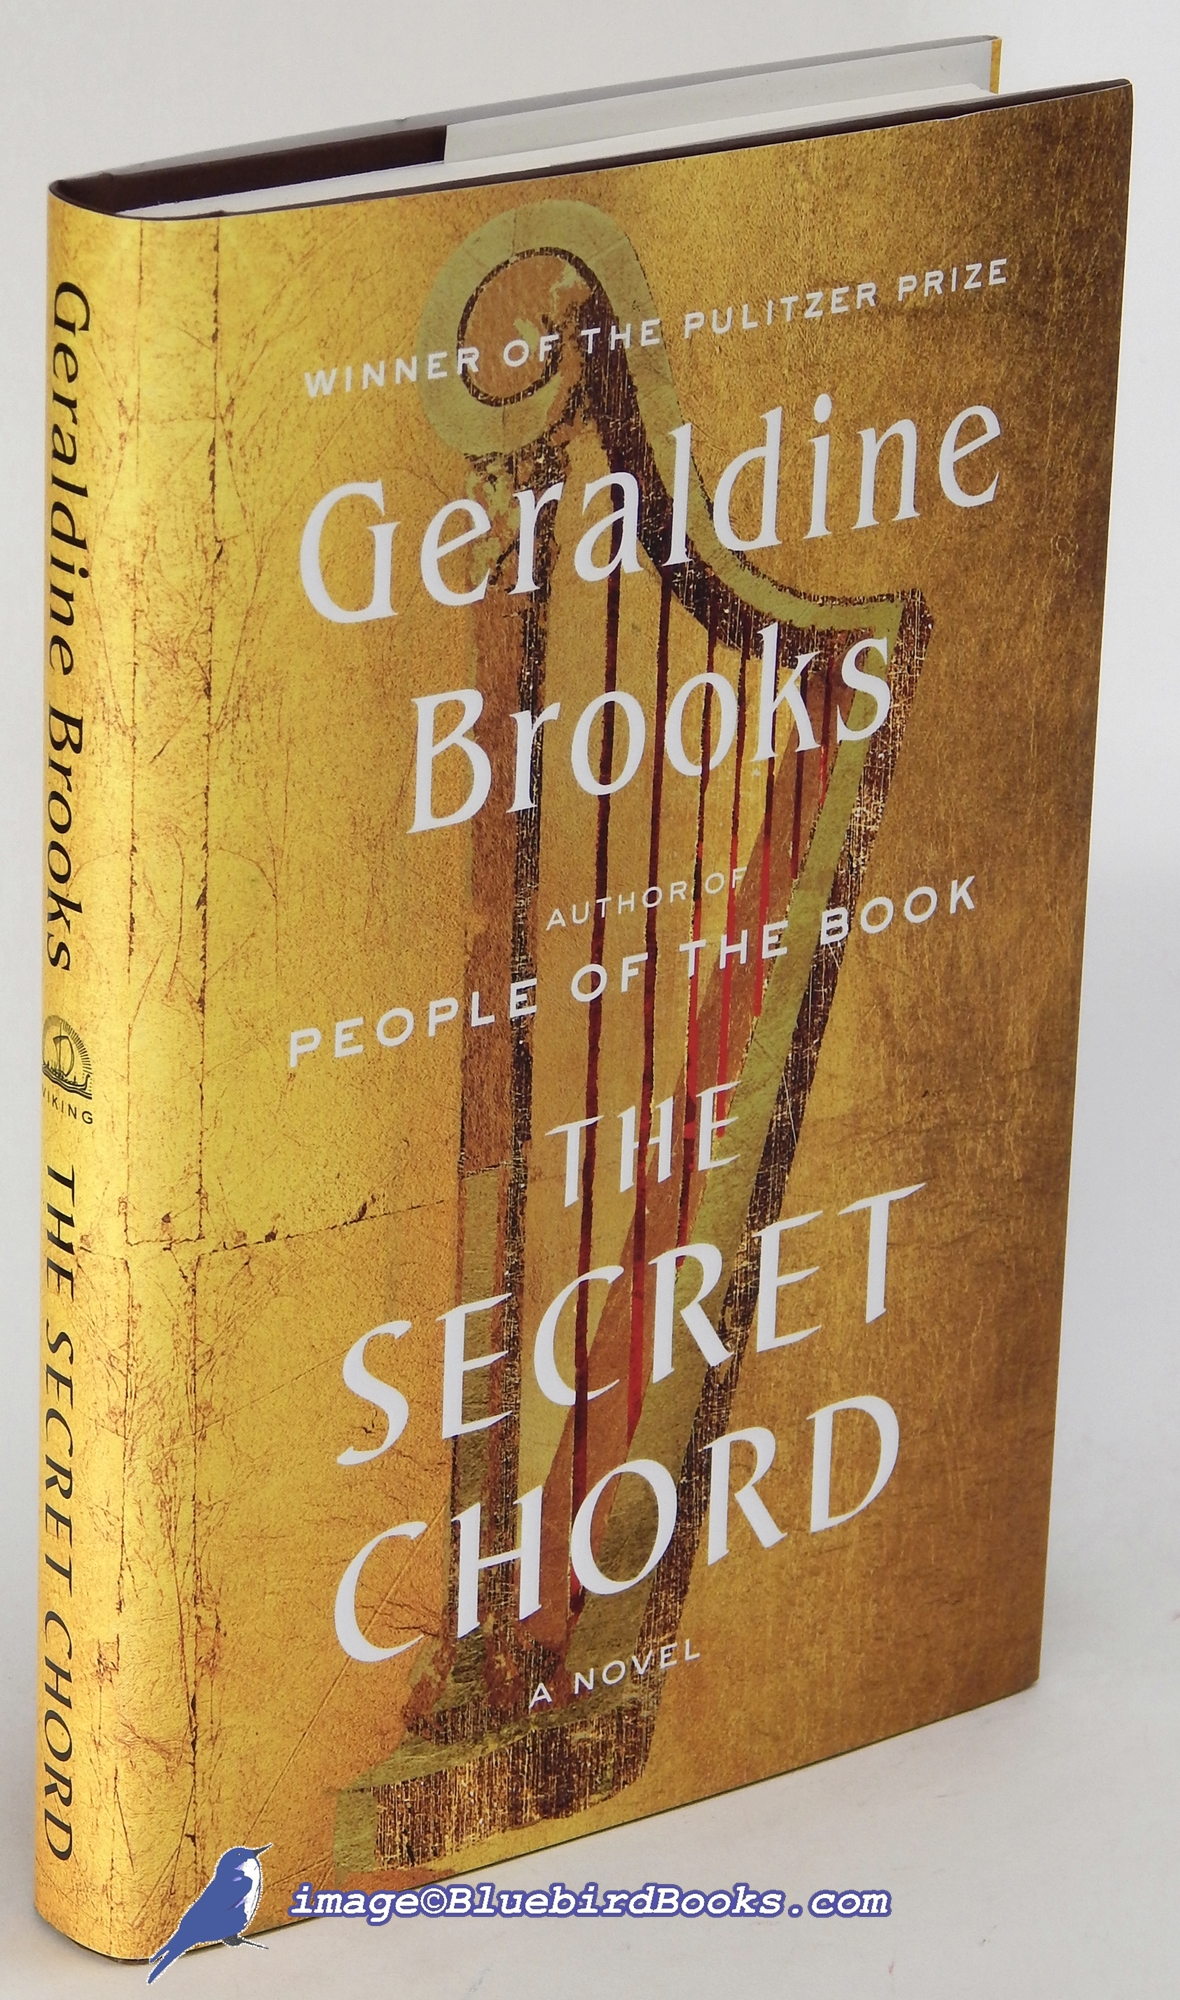 BROOKS, GERALDINE - The Secret Chord